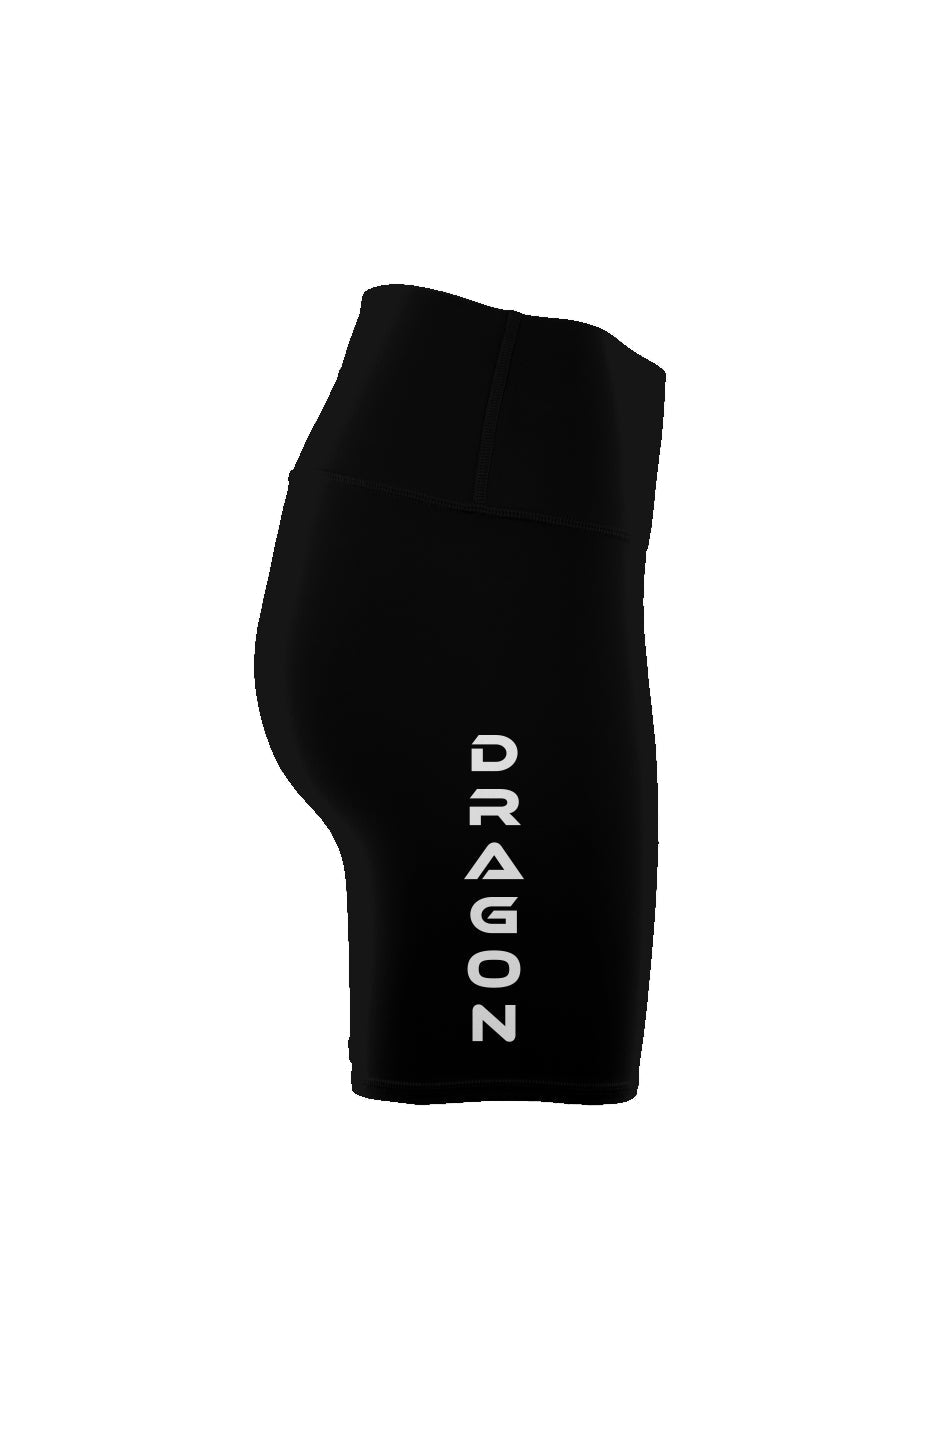 Women's Black High Waist Biker Shorts - Dragon Foxx™ - shorts - Apliiq - Women's Black High Waist Biker Shorts - Dragon Foxx™ - APQ-4509737S5A1 - xs - black - - -